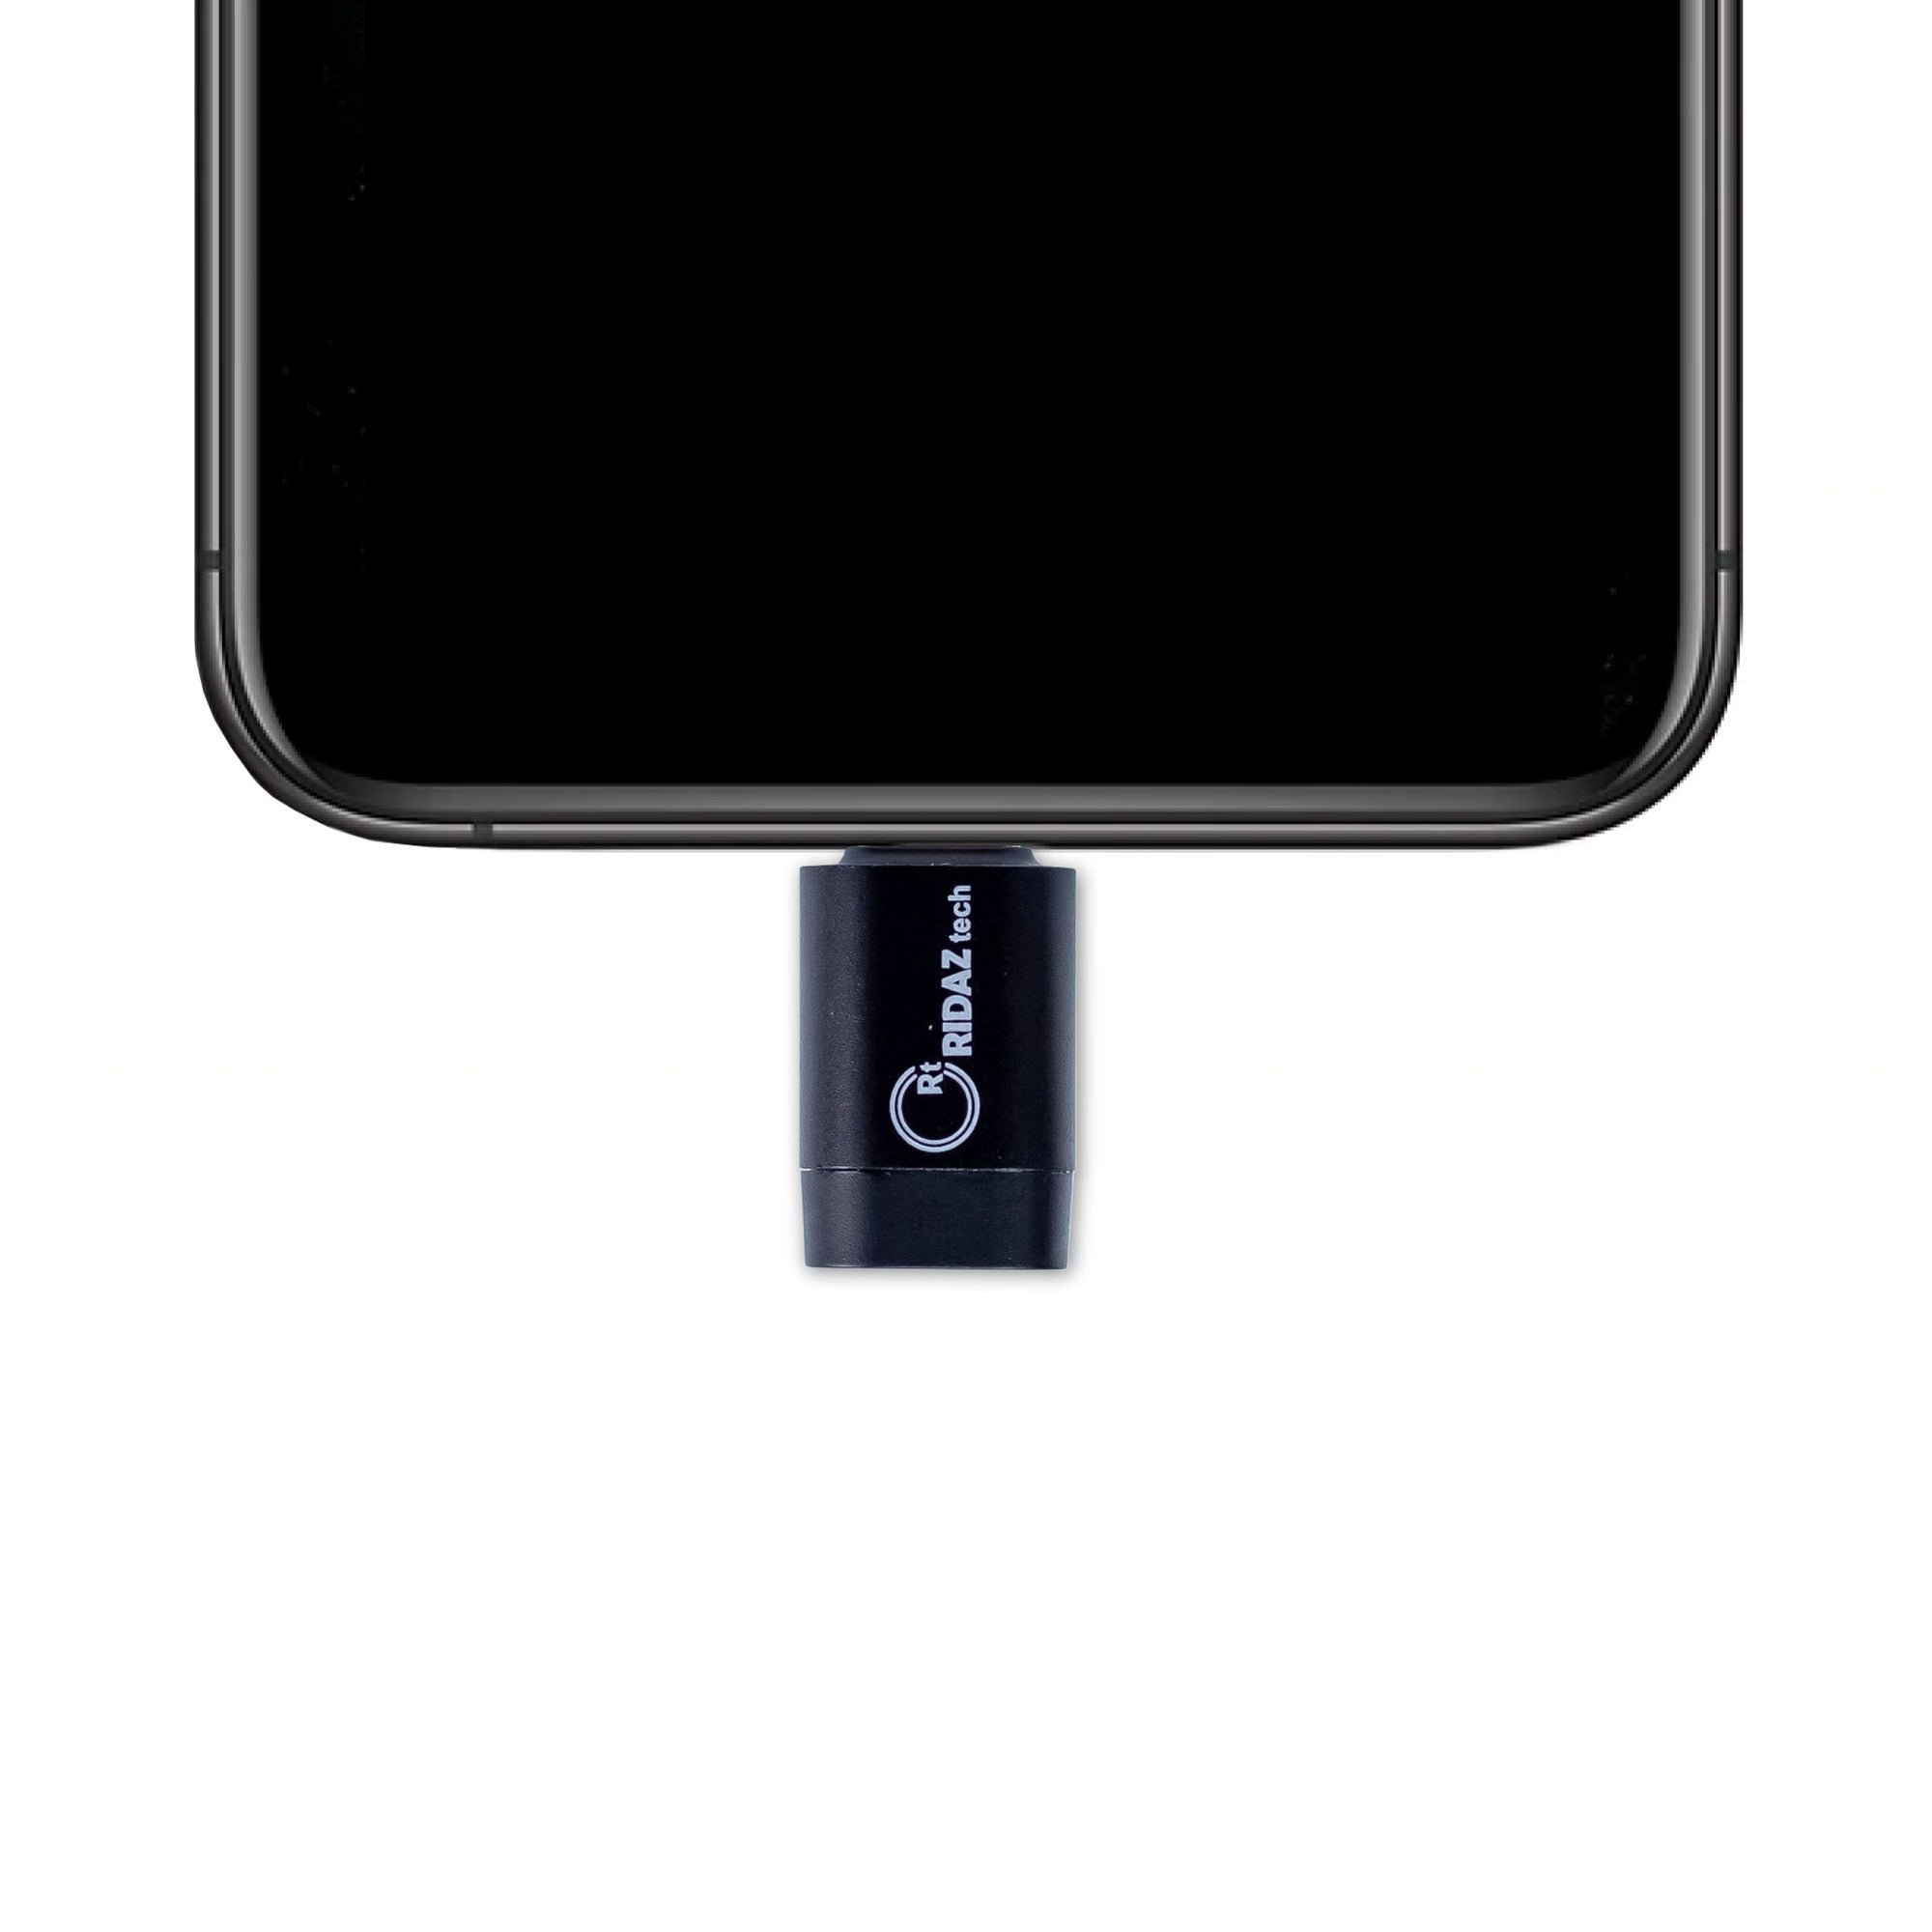 Ridaz Tech UV-C mini sterilizer, USB-C for Android